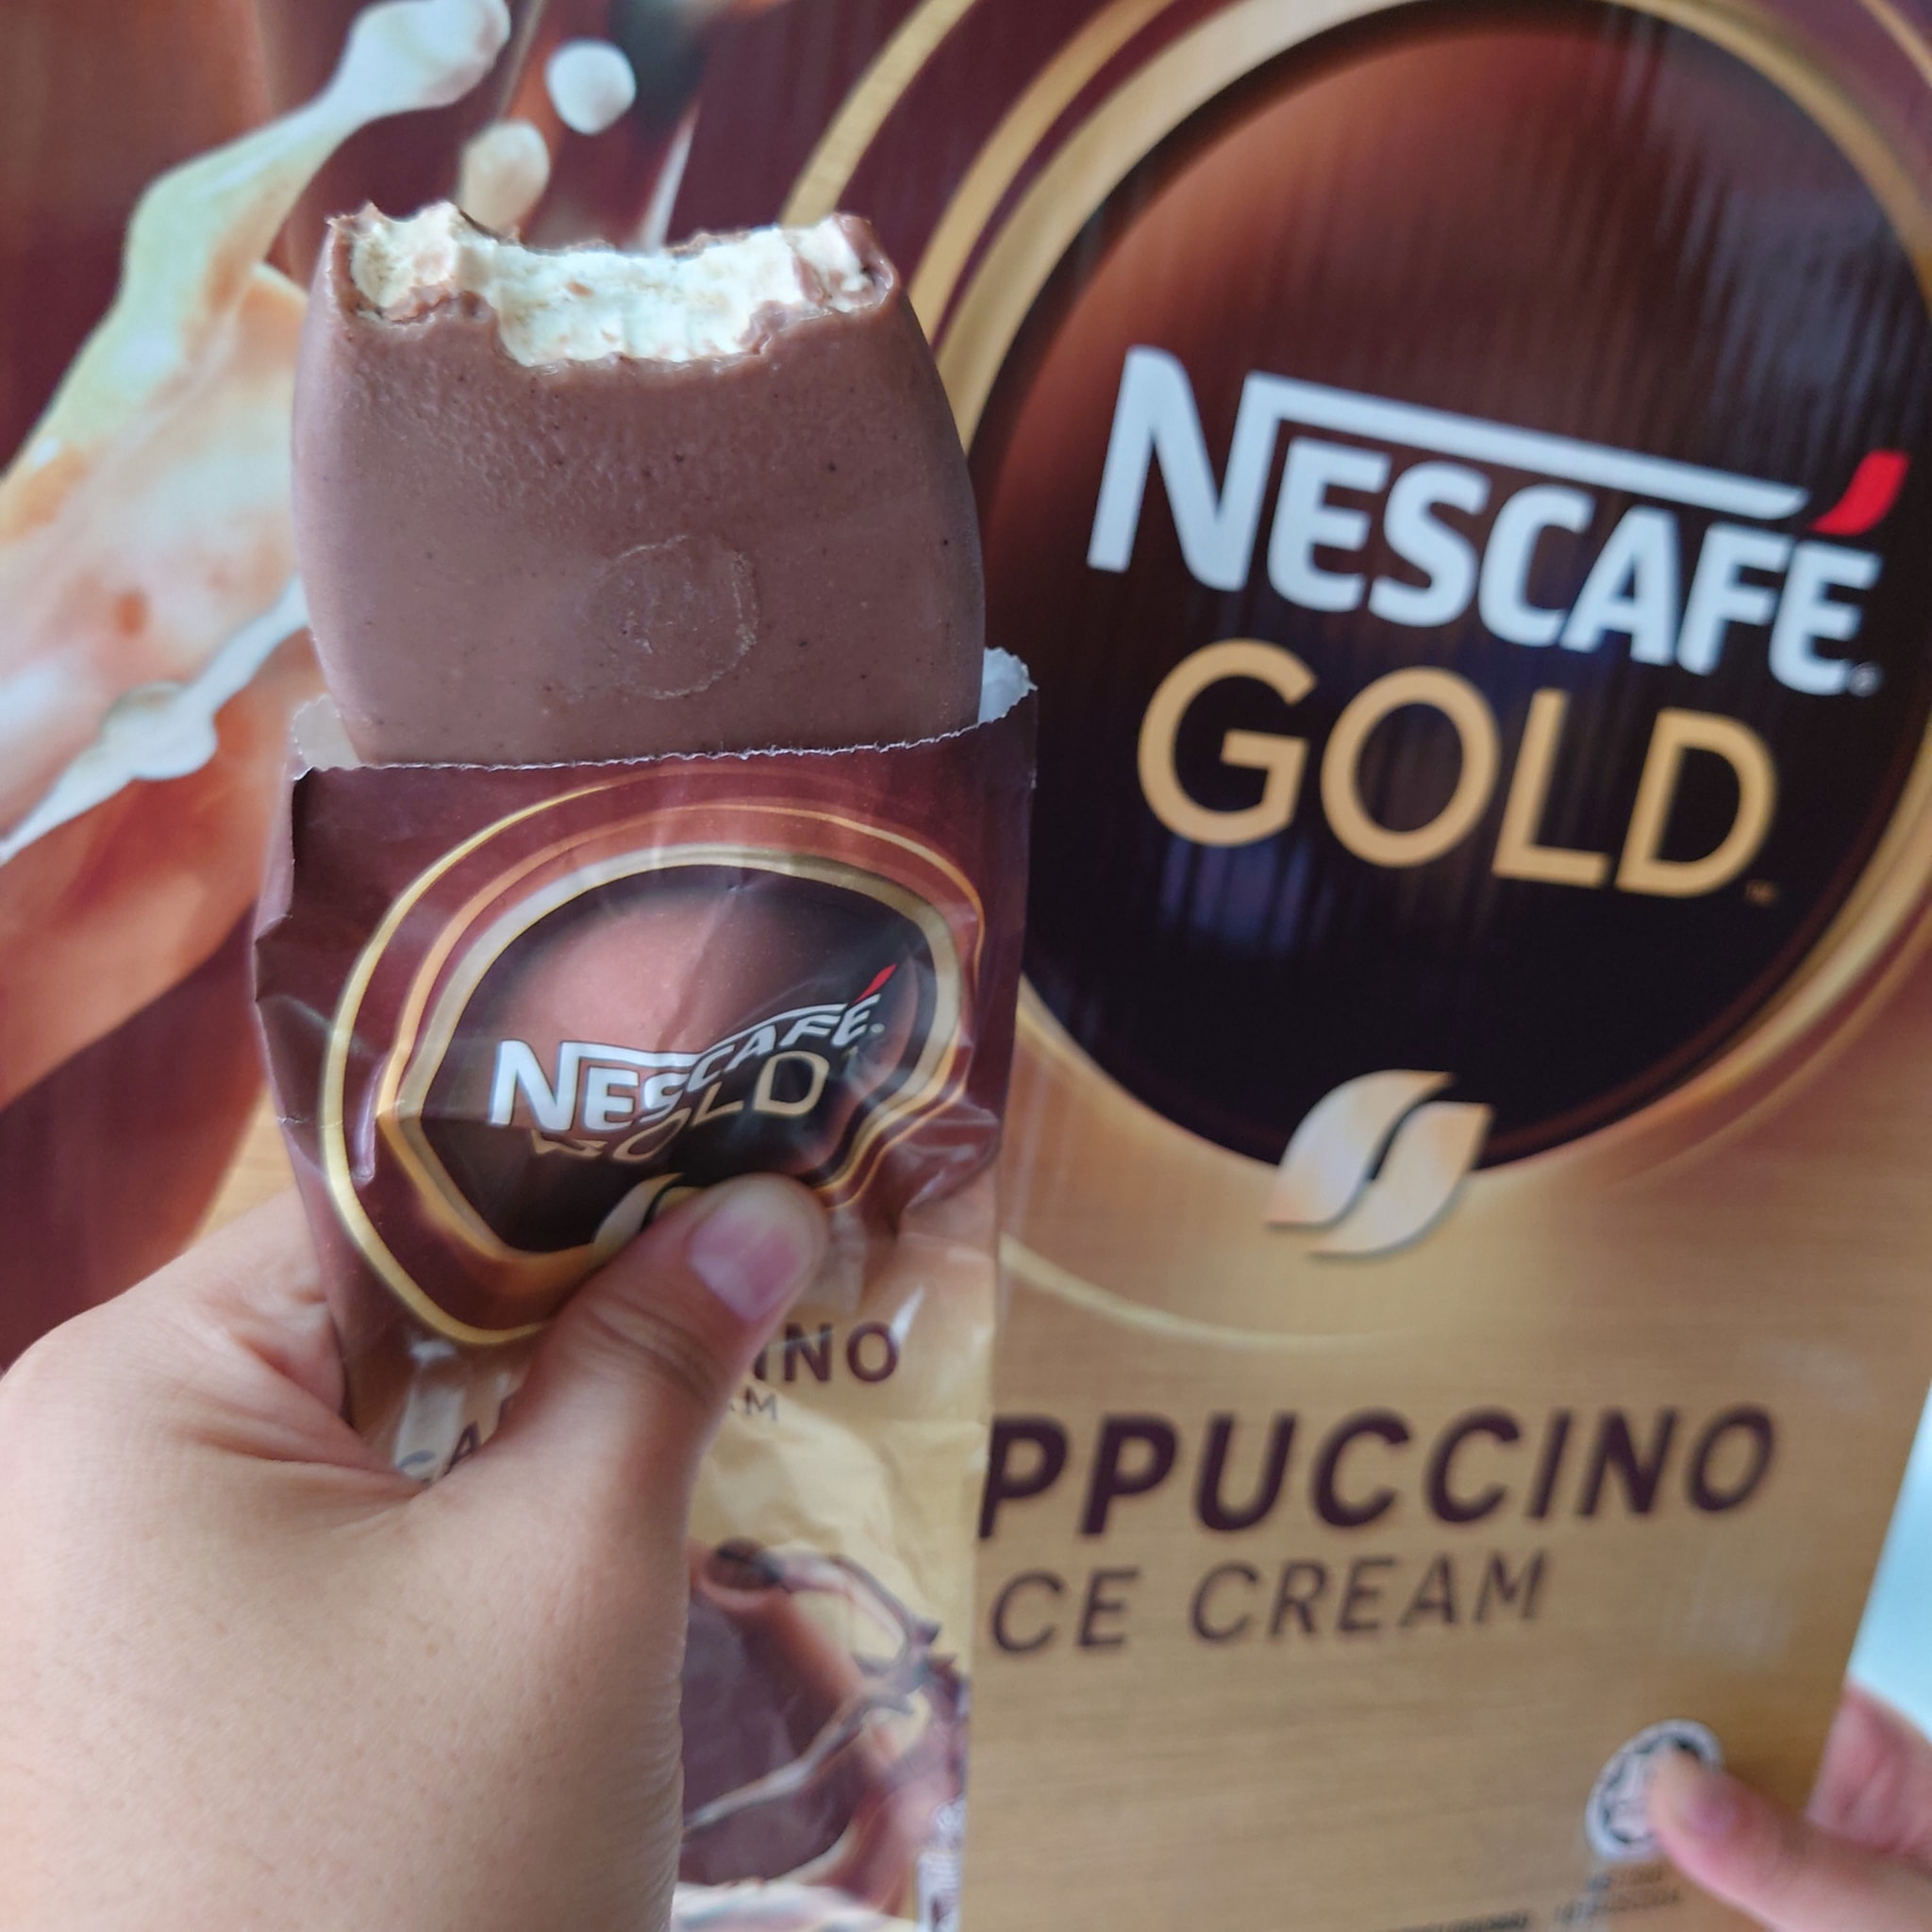 Nescafe GOLD ice cream